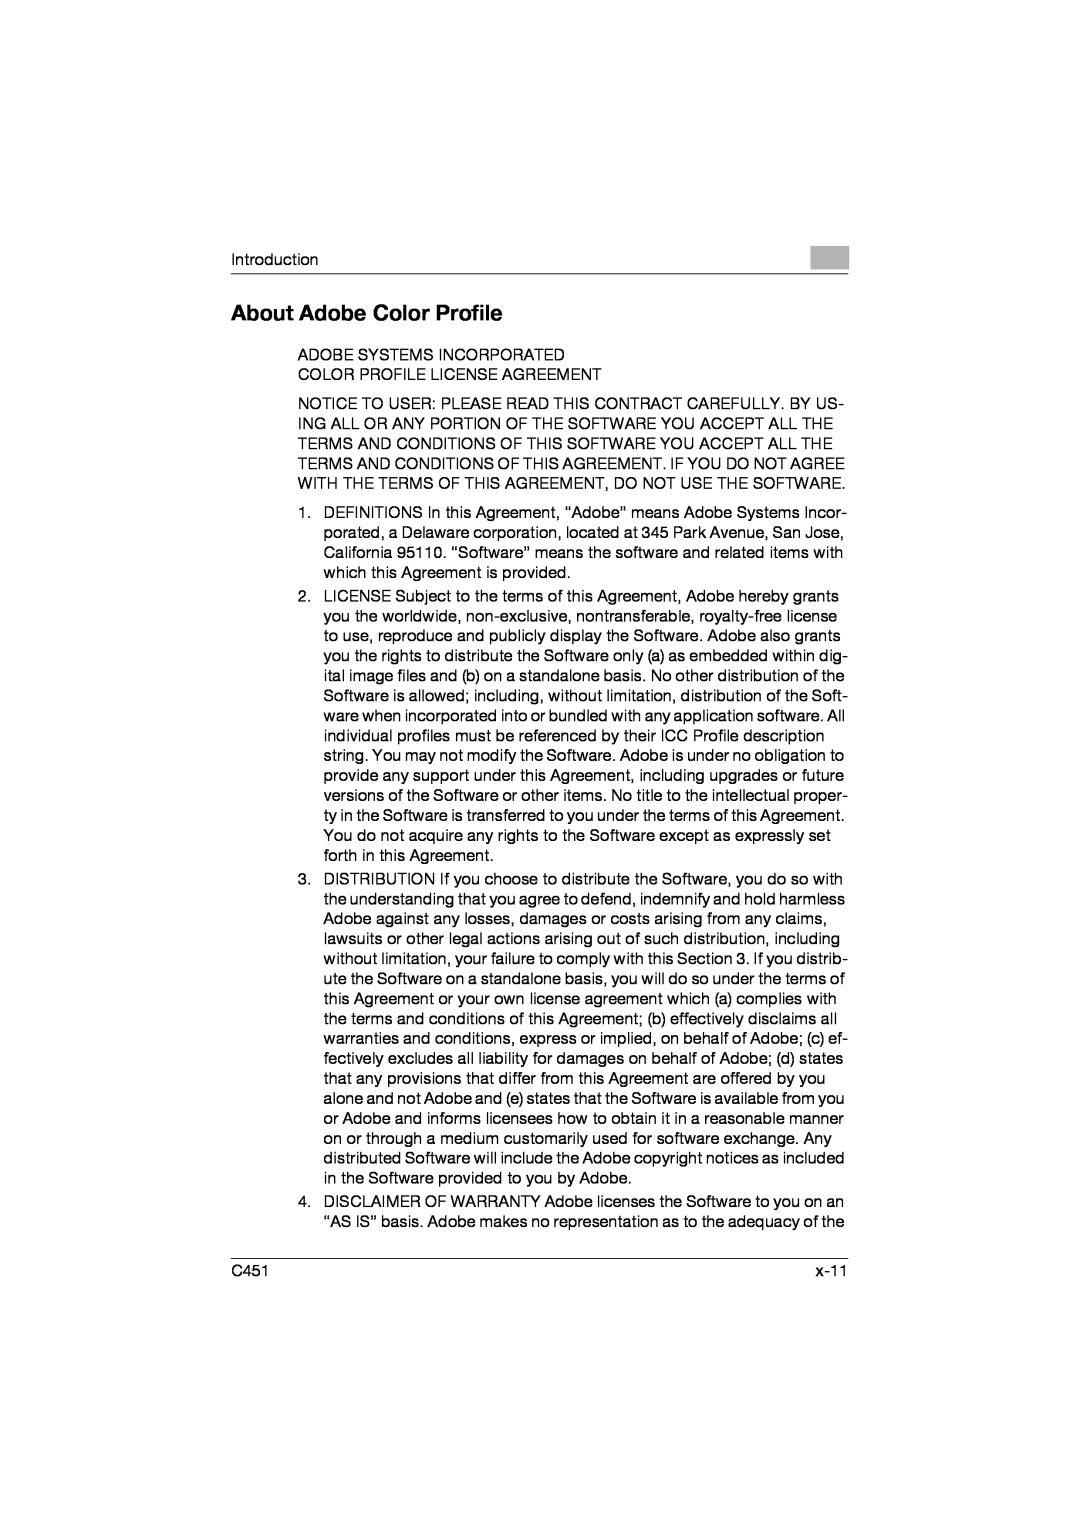 Konica Minolta C451 manual About Adobe Color Profile 